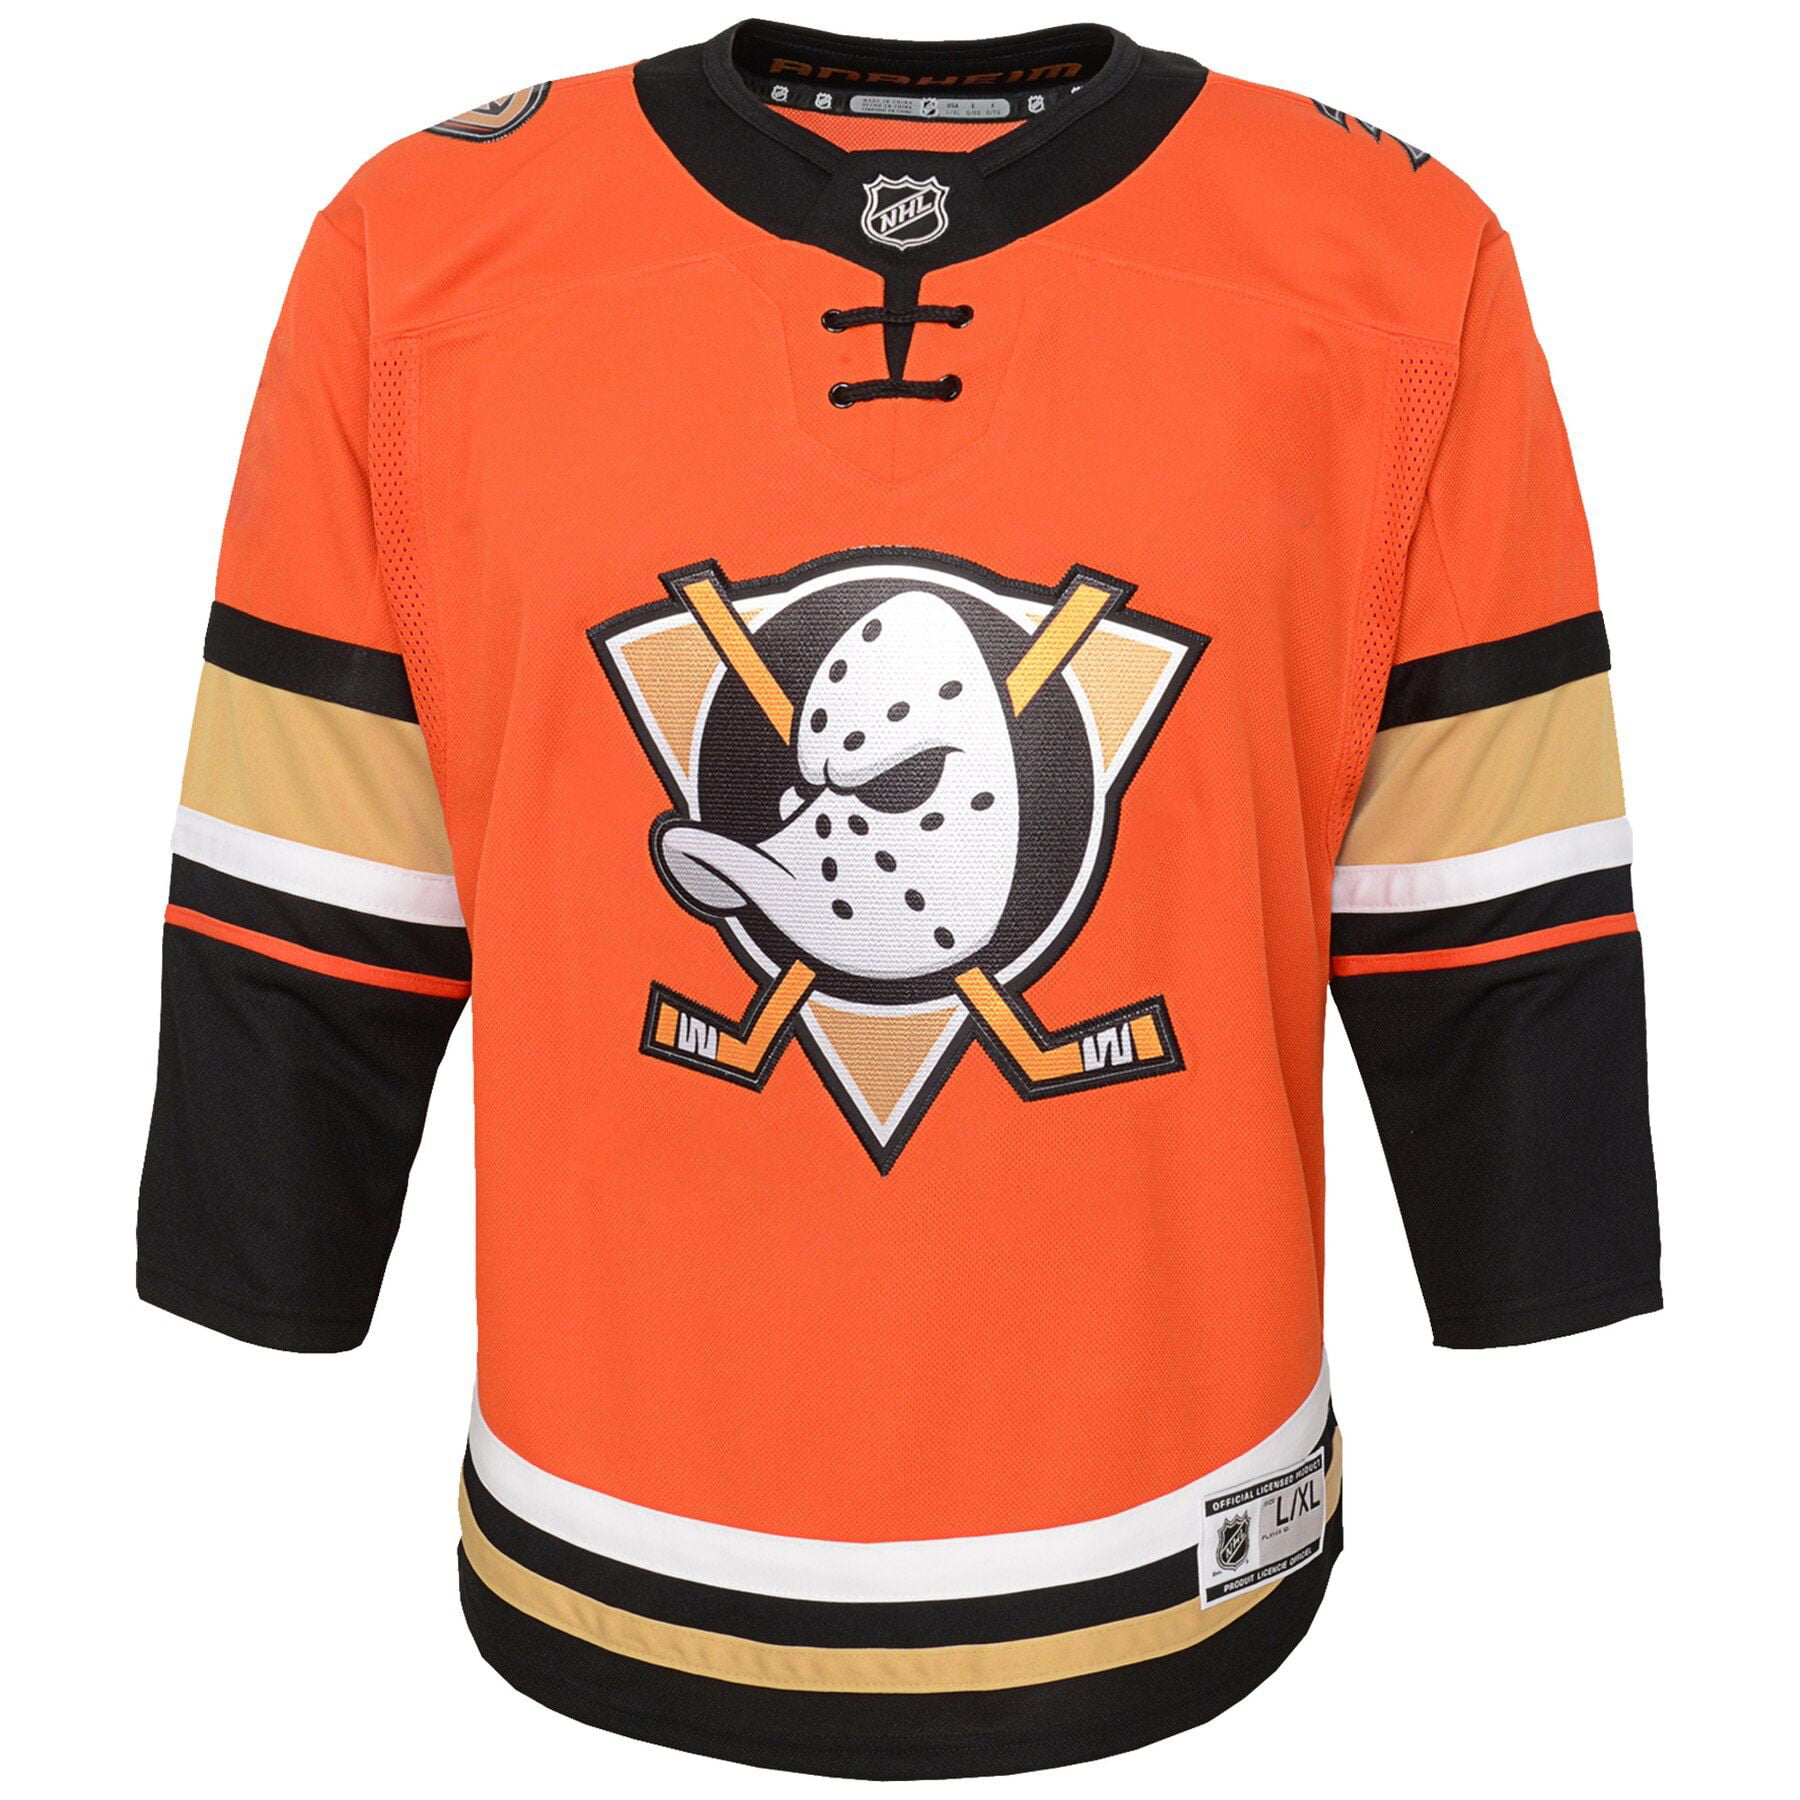 anaheim ducks youth hockey jersey